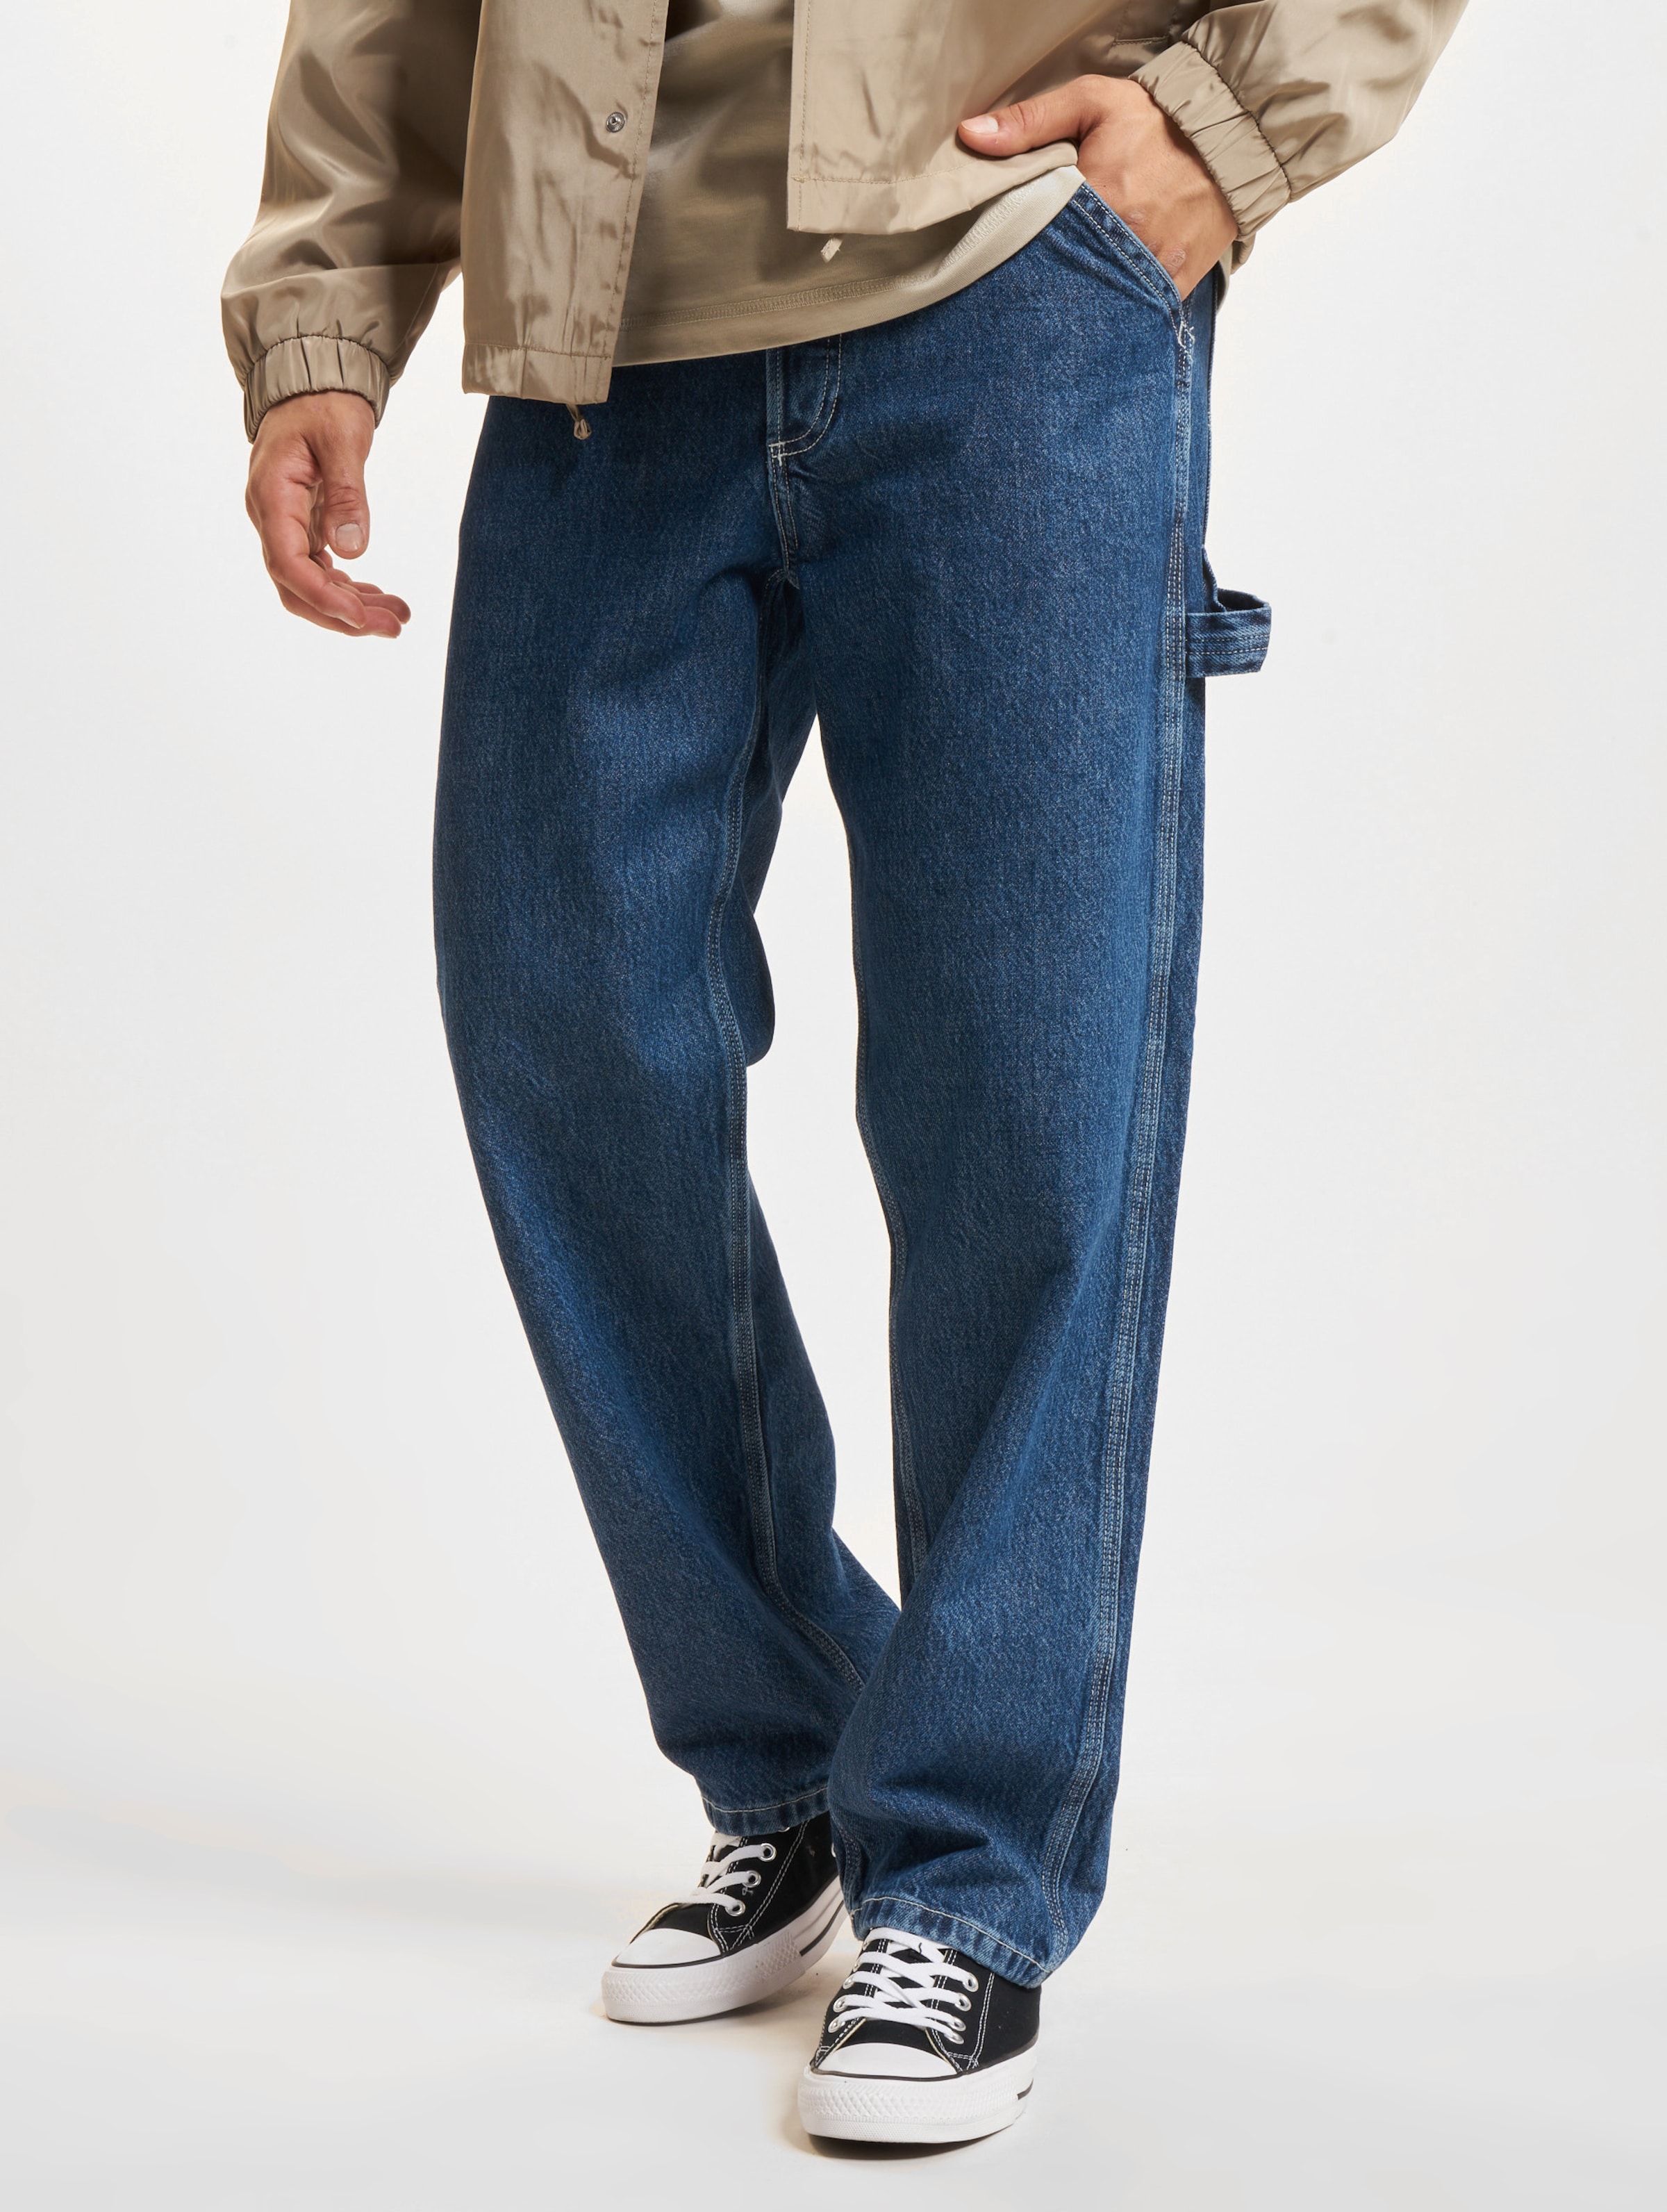 Jack & Jones Eddie Carpenter SBD 316 Loose Fit Jeans Mannen op kleur blauw, Maat 3334